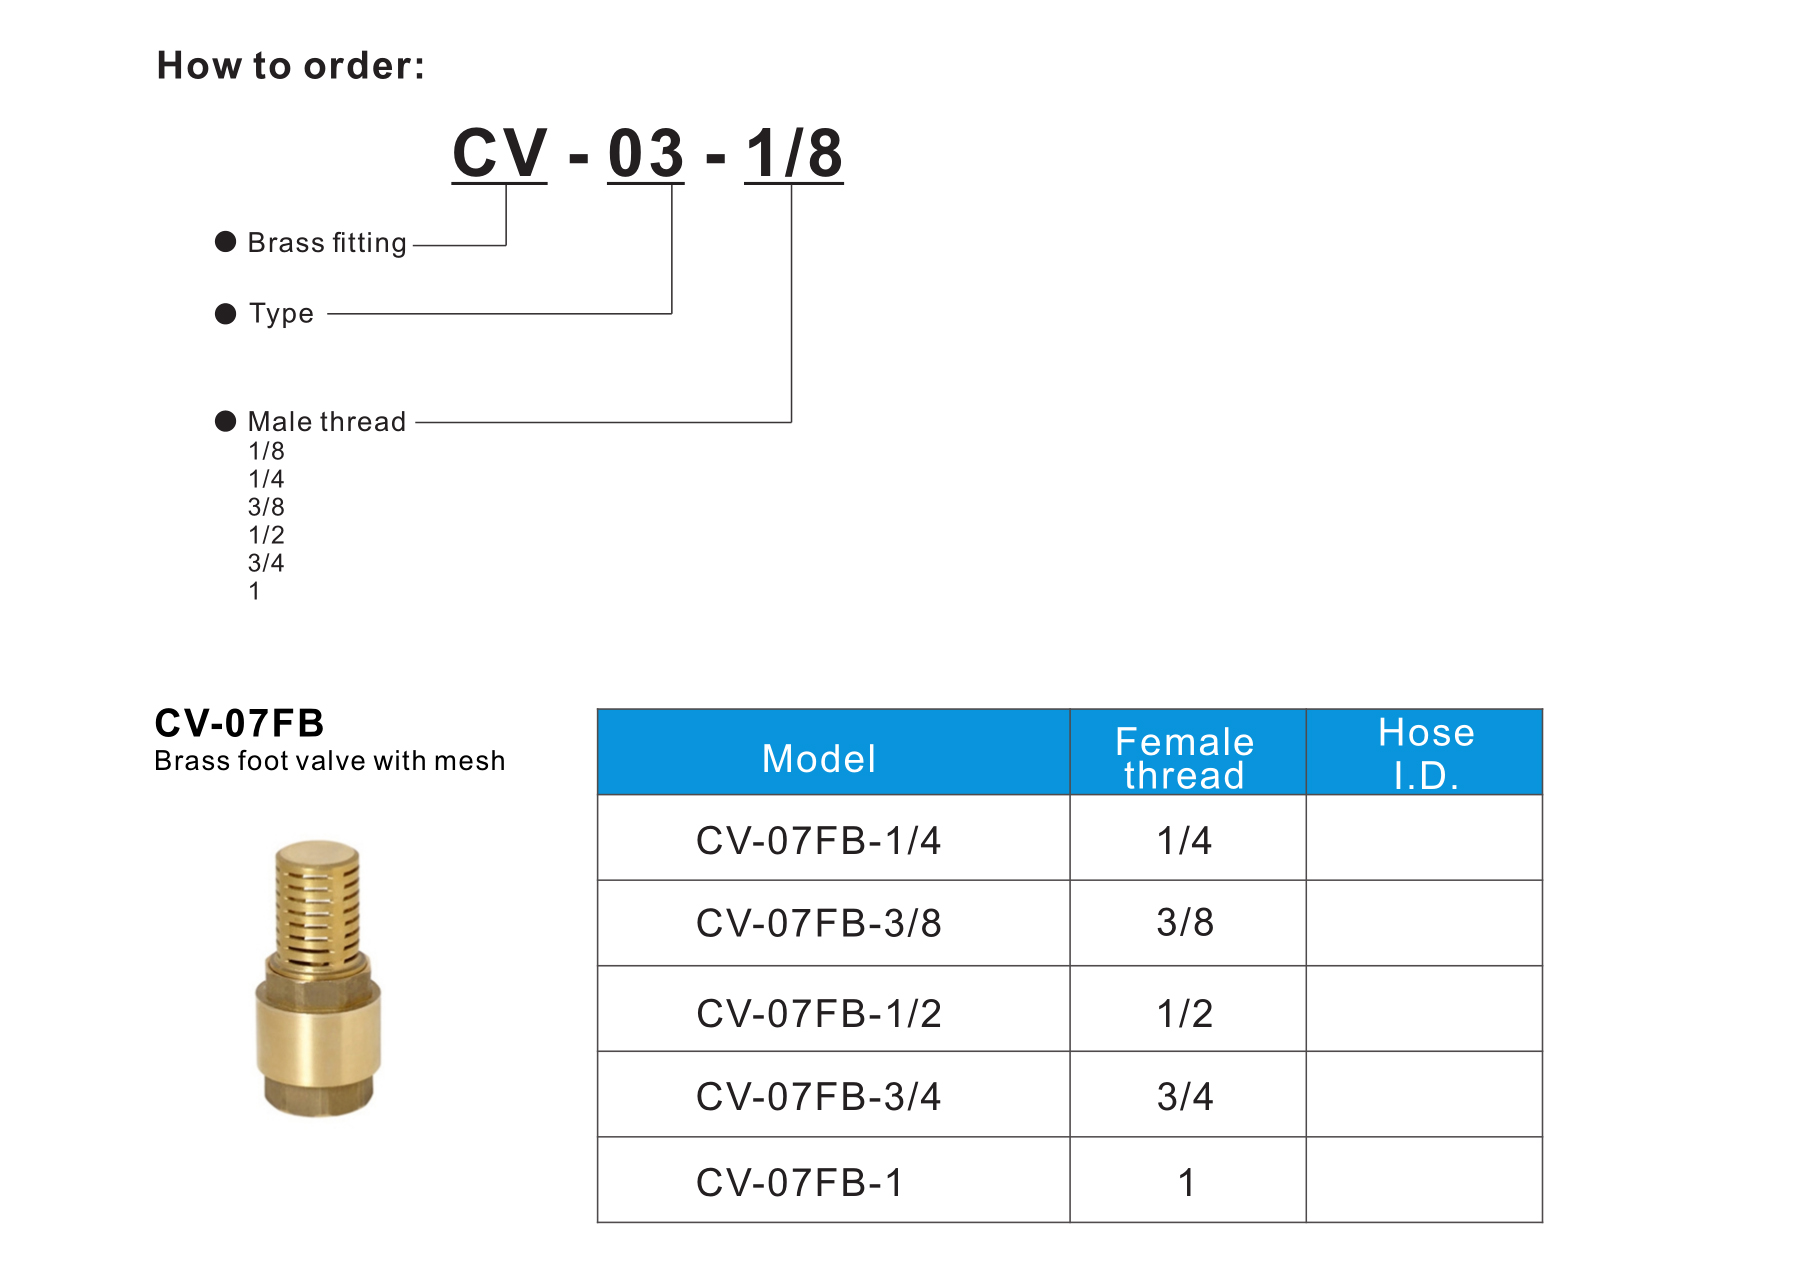 CV-07FB Brass foot valve with mesh